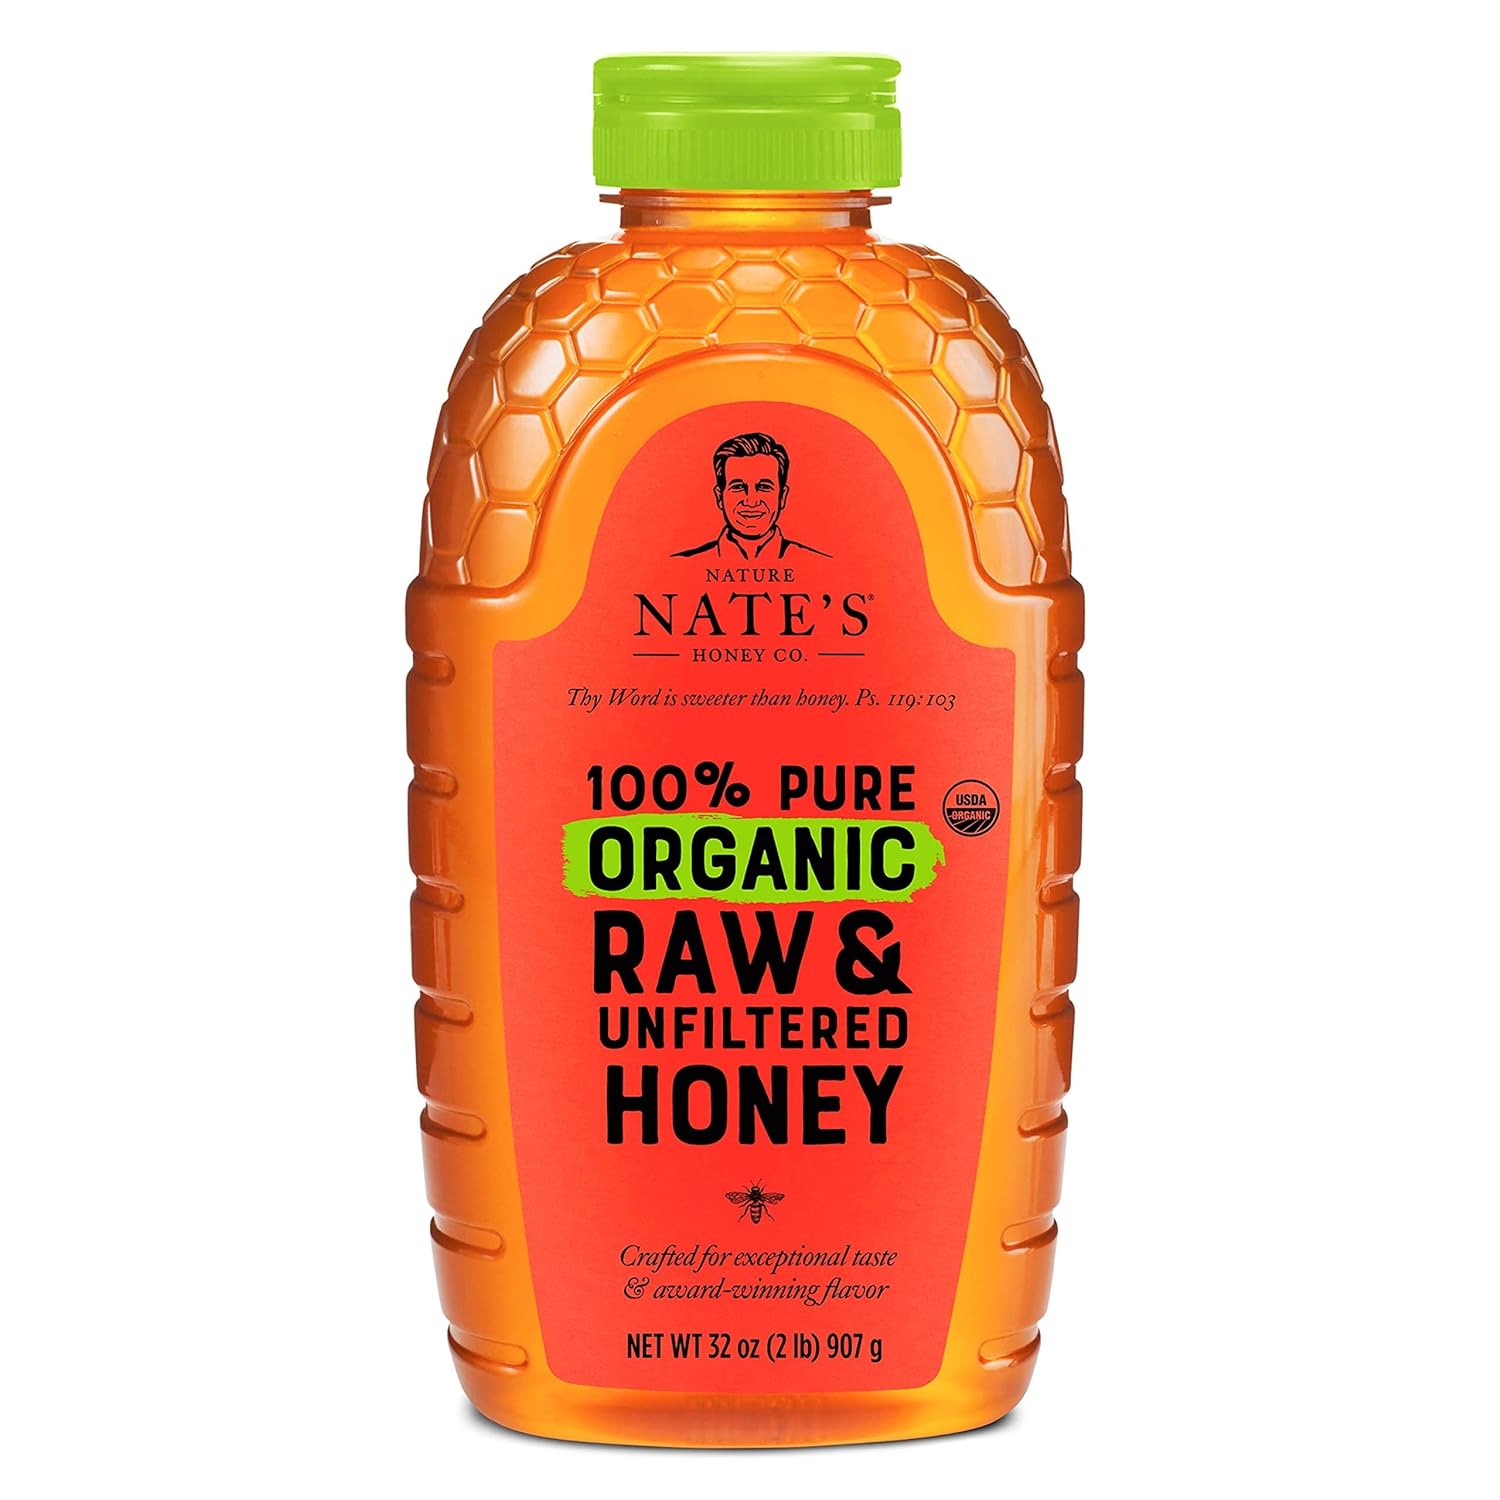 Nate’s Organic Honey Review